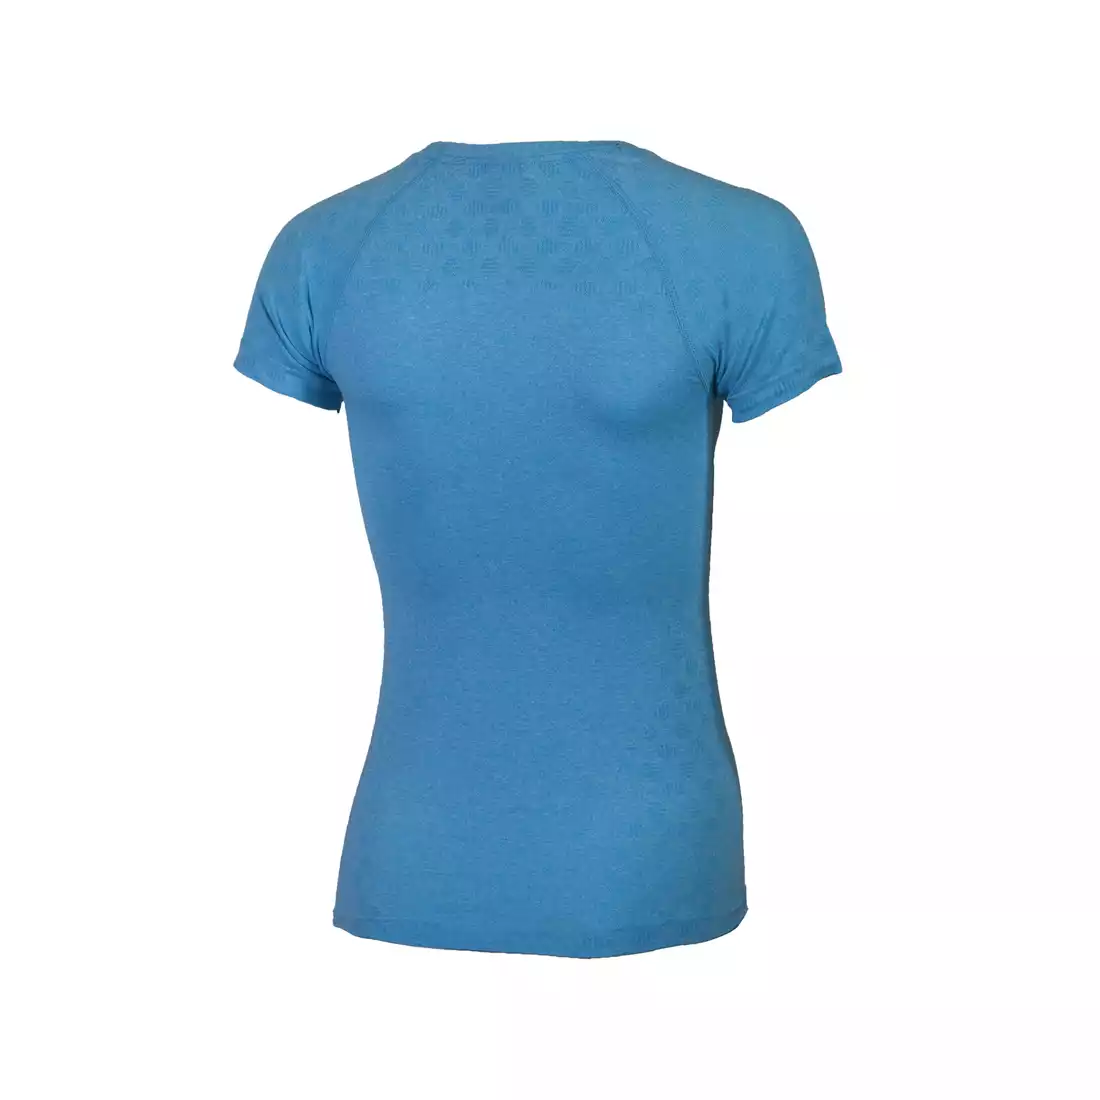 ROGELLI SEAMLESS damska koszulka sportowa, niebieska 801.272